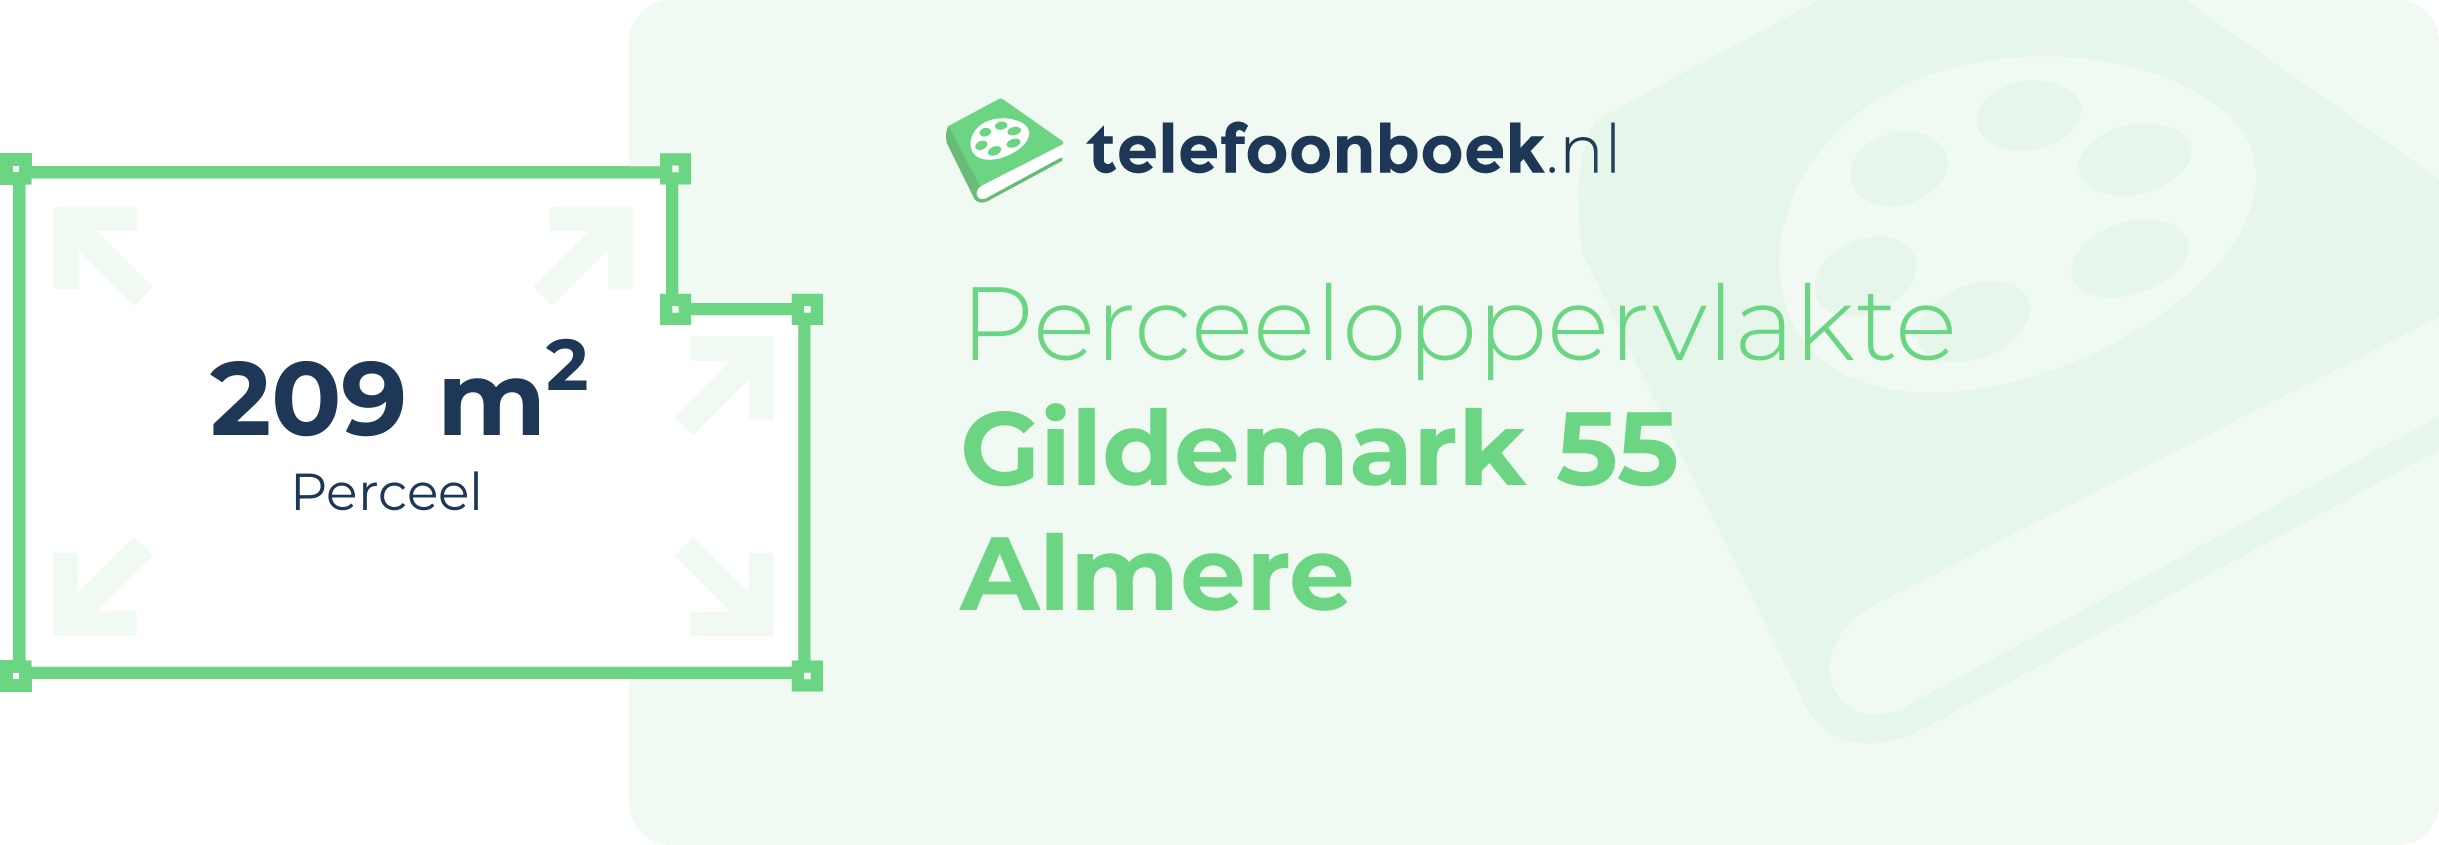 Perceeloppervlakte Gildemark 55 Almere